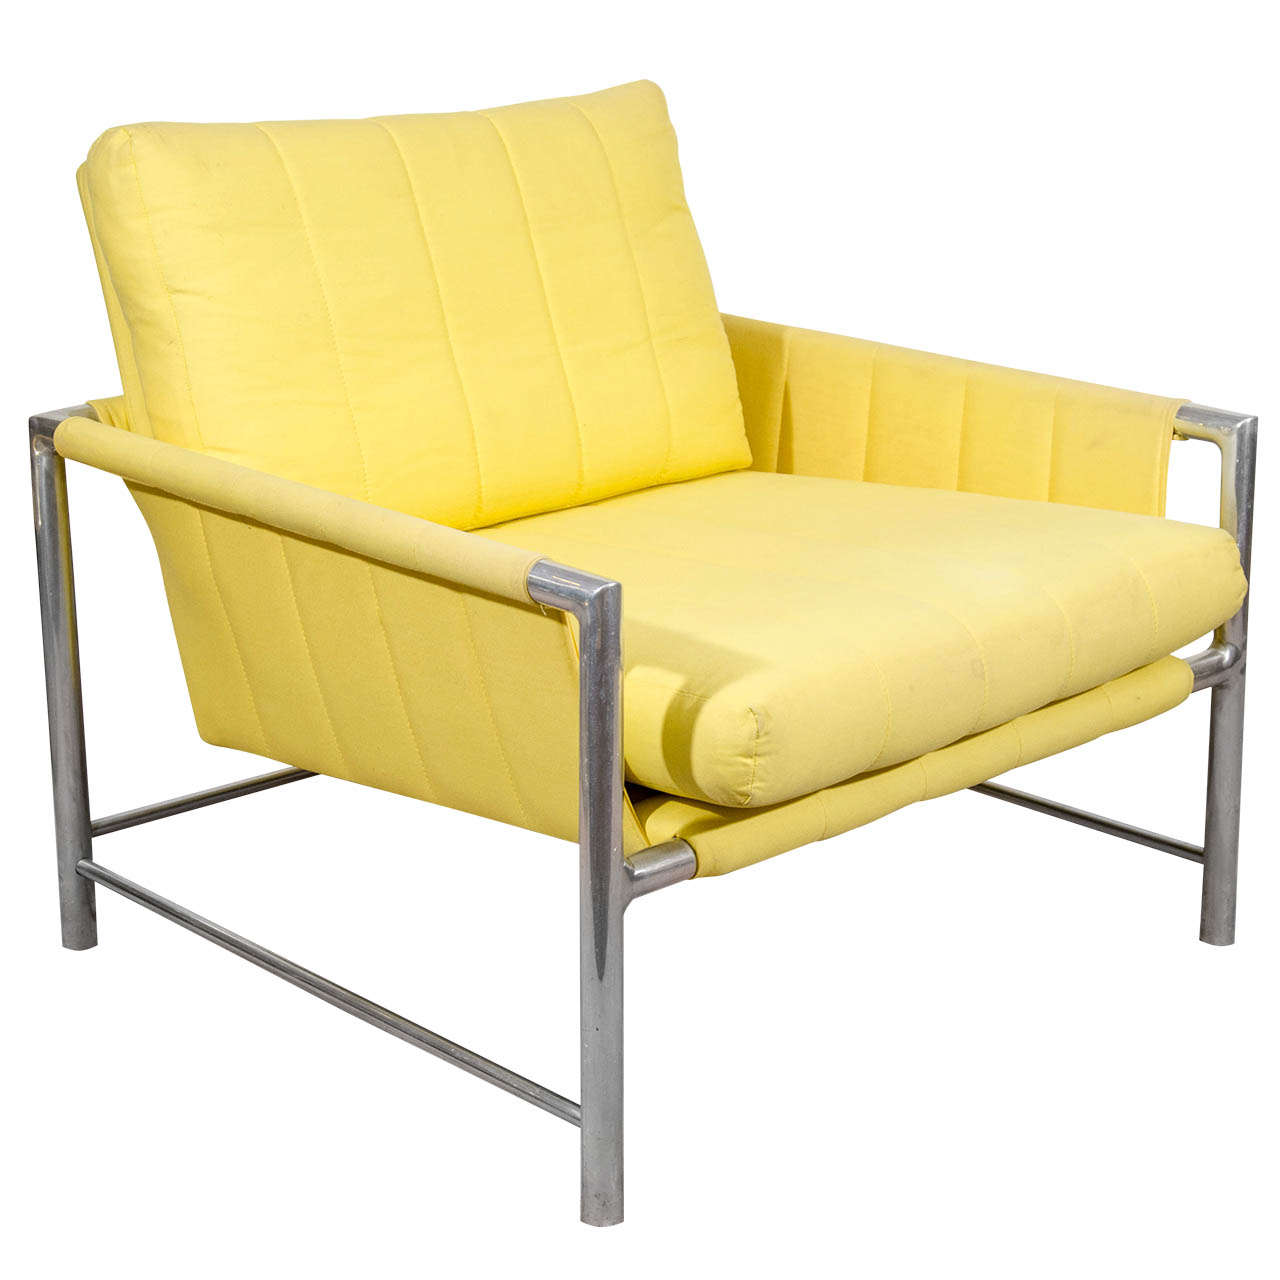 A Mid Century Milo Baughman Style Armchair in Lemon Yellow Fabric